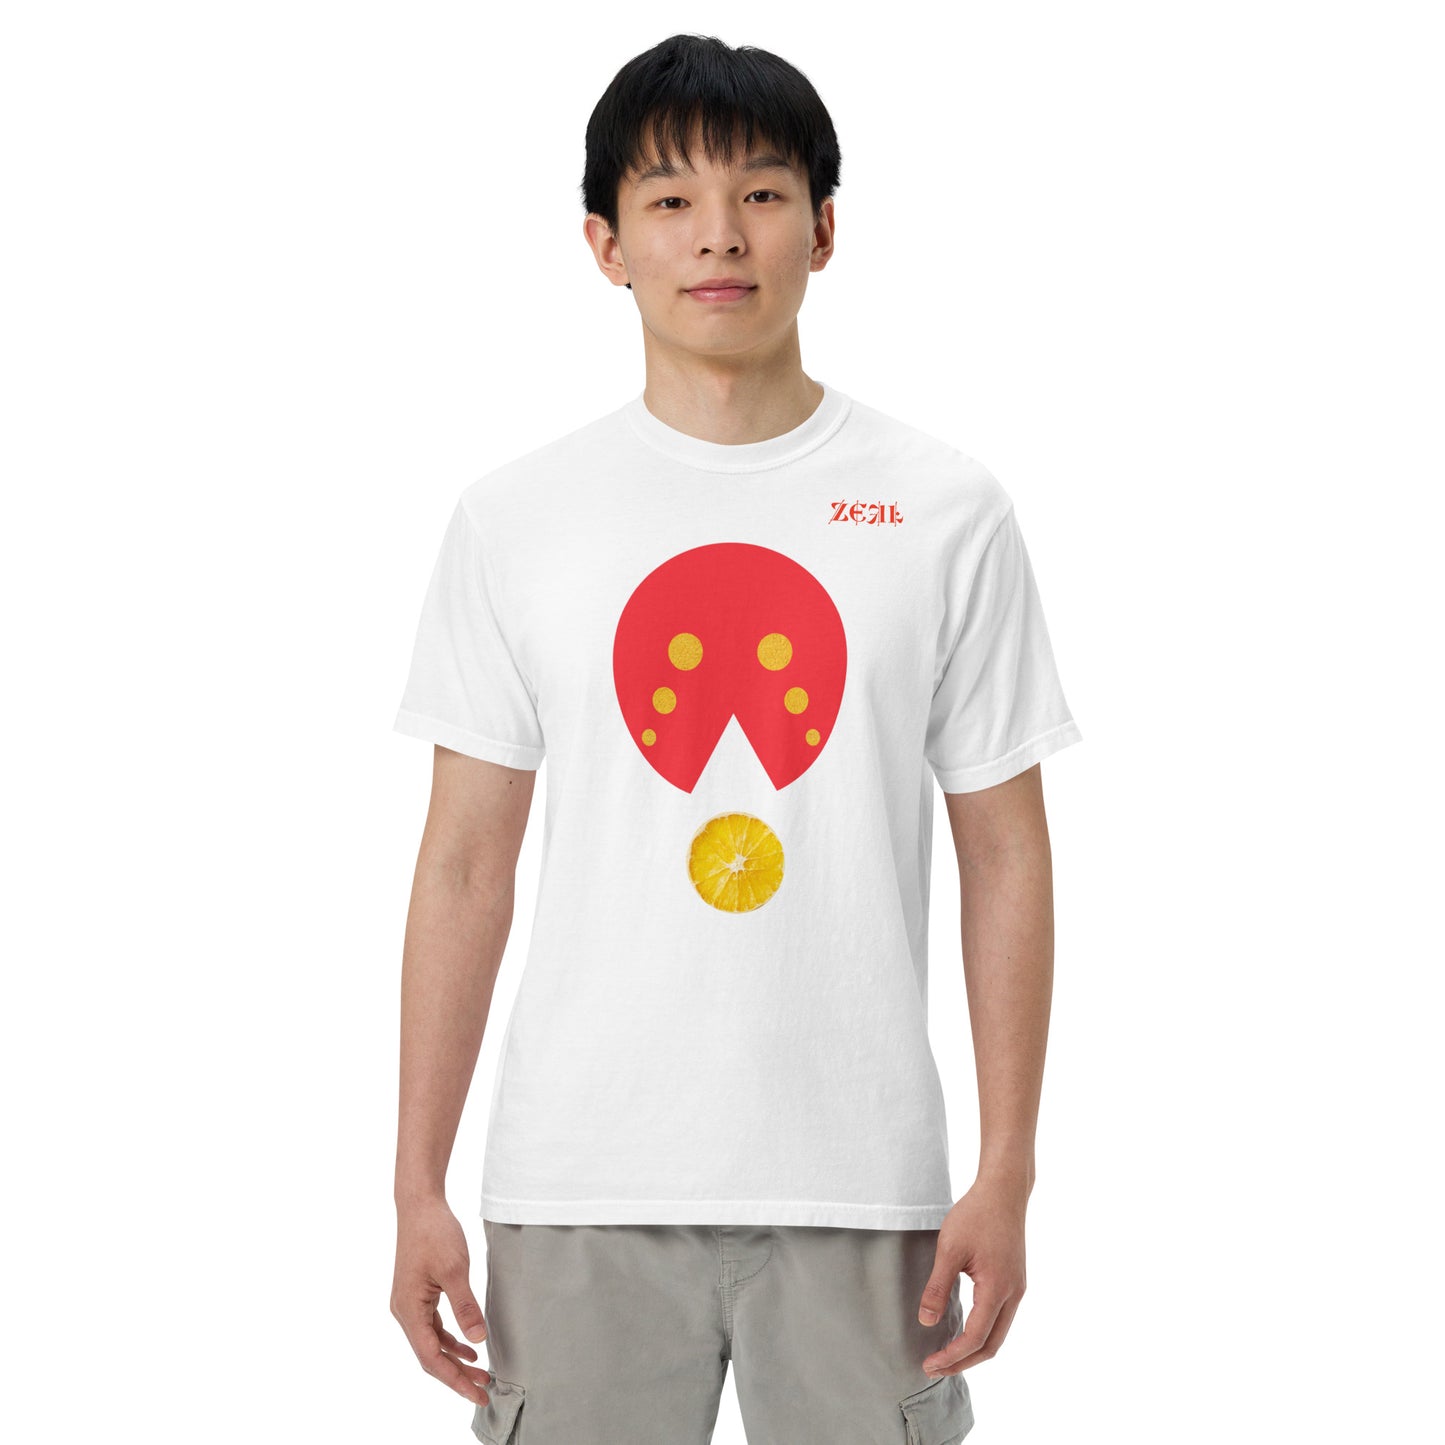 Heavyweight Lemon t-shirt |Unique design tshirts for men|ONLYZ3AL